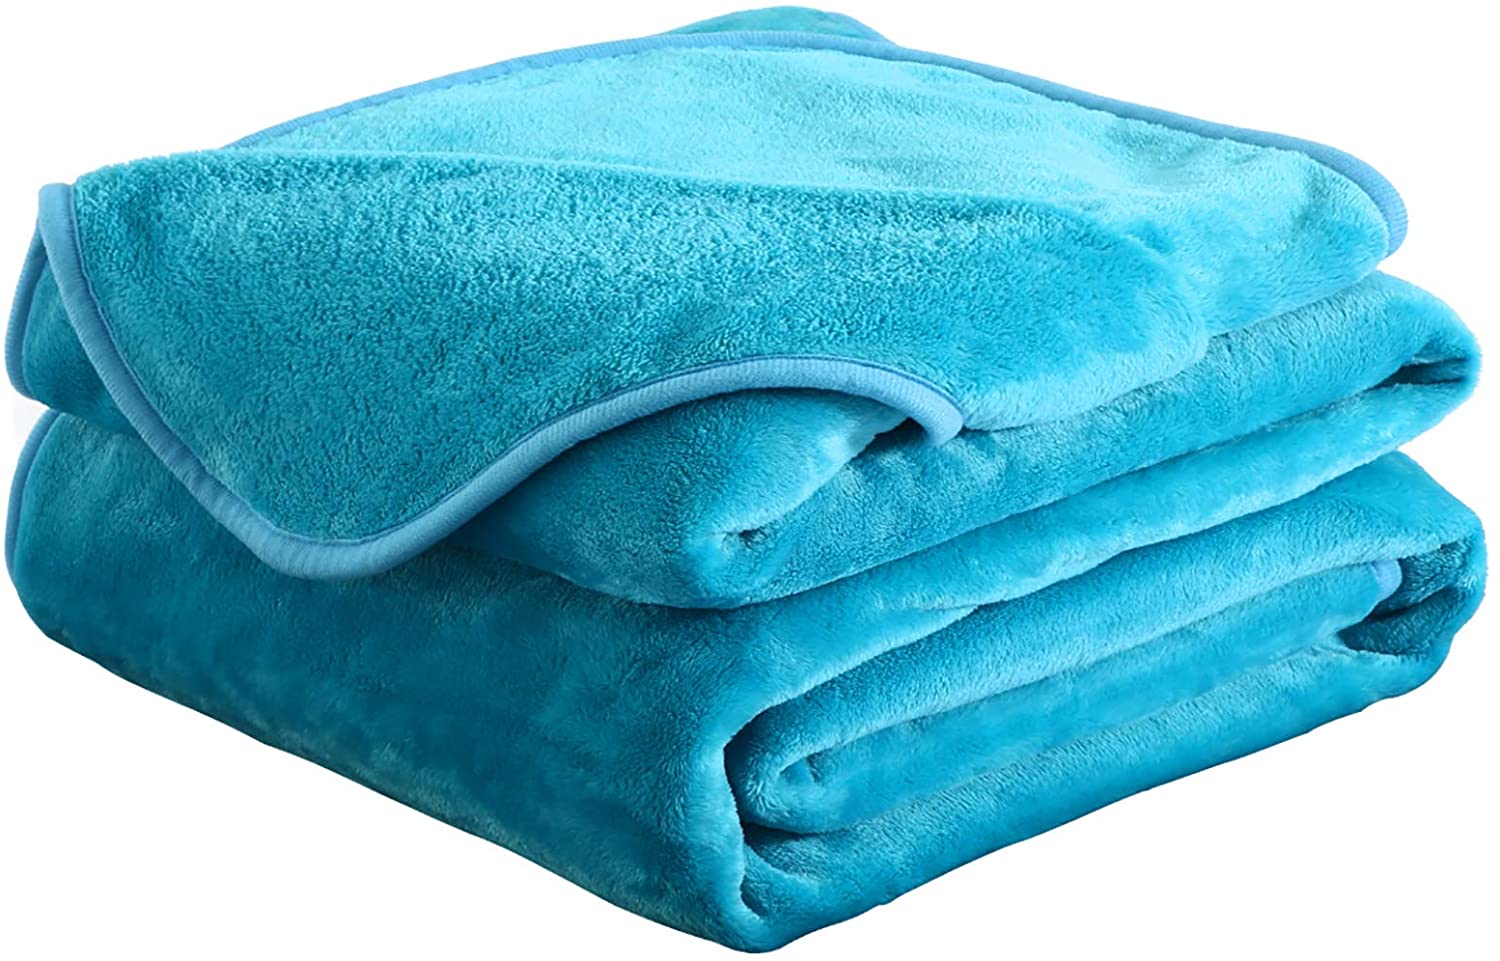 Soft California King Blanket Warm Fuzzy Microplush Lightweight Thermal Fleece Bl 